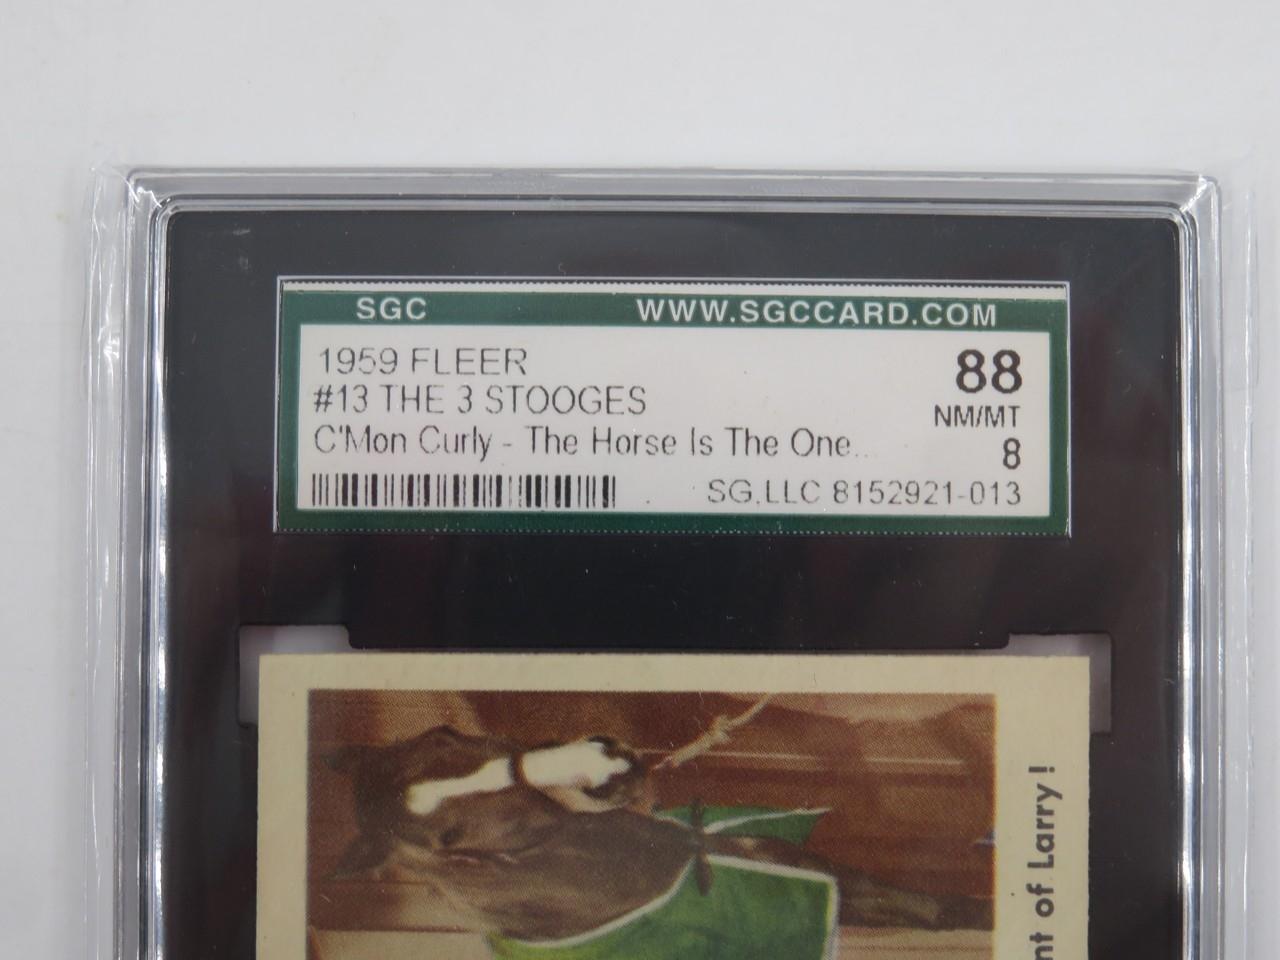 Three Stooges 1959 Fleer Card #13 SGC 8/88